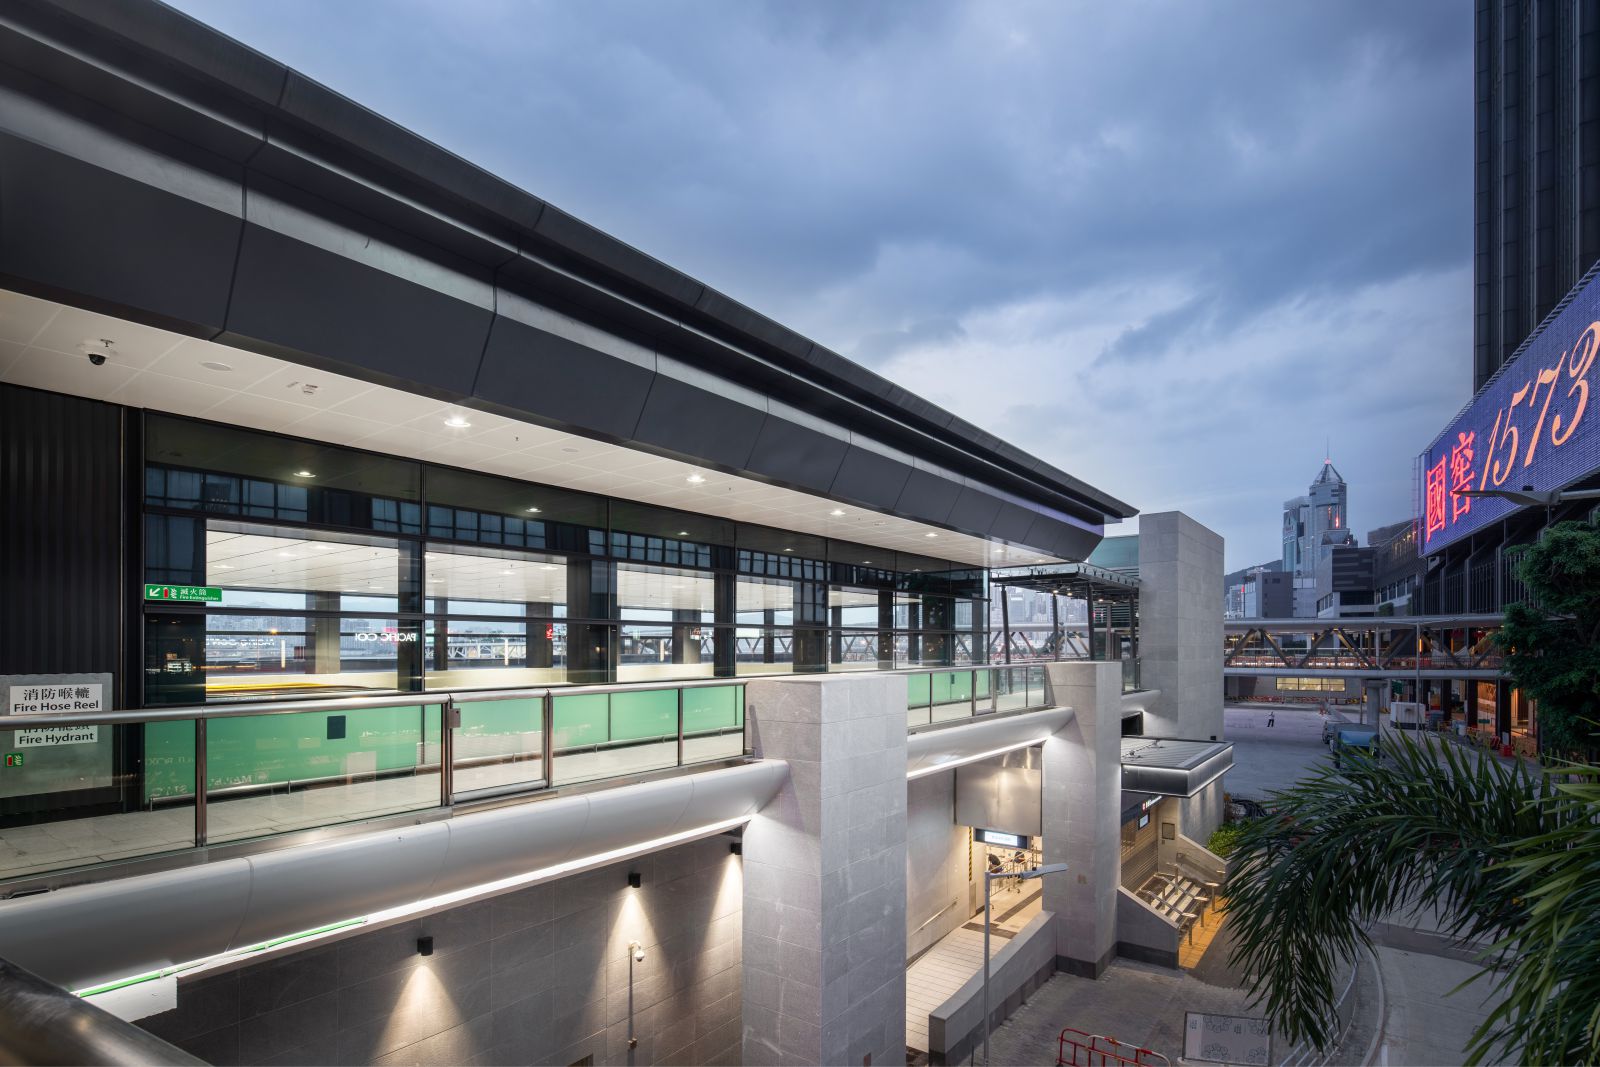 Exhibition Center Station by Farrells dibuka untuk umum – arsitektur